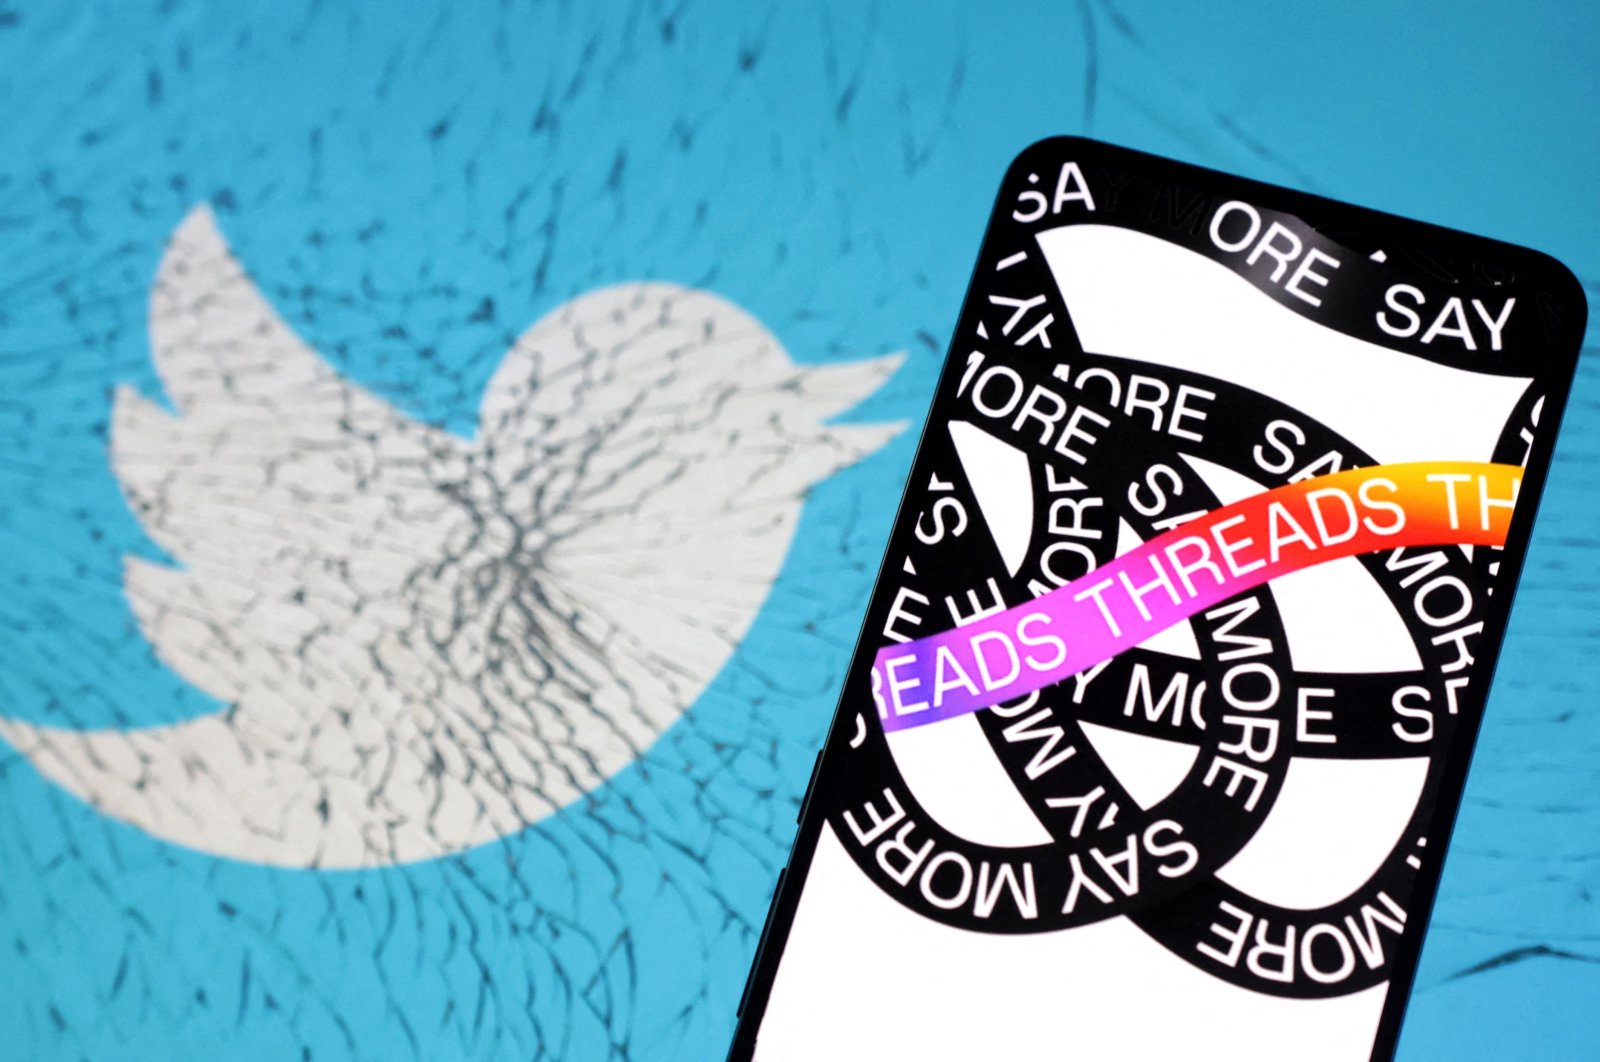 Saingan Twitter Threads memecahkan rekor untuk mendaftar 100 juta pengguna dalam 5 hari